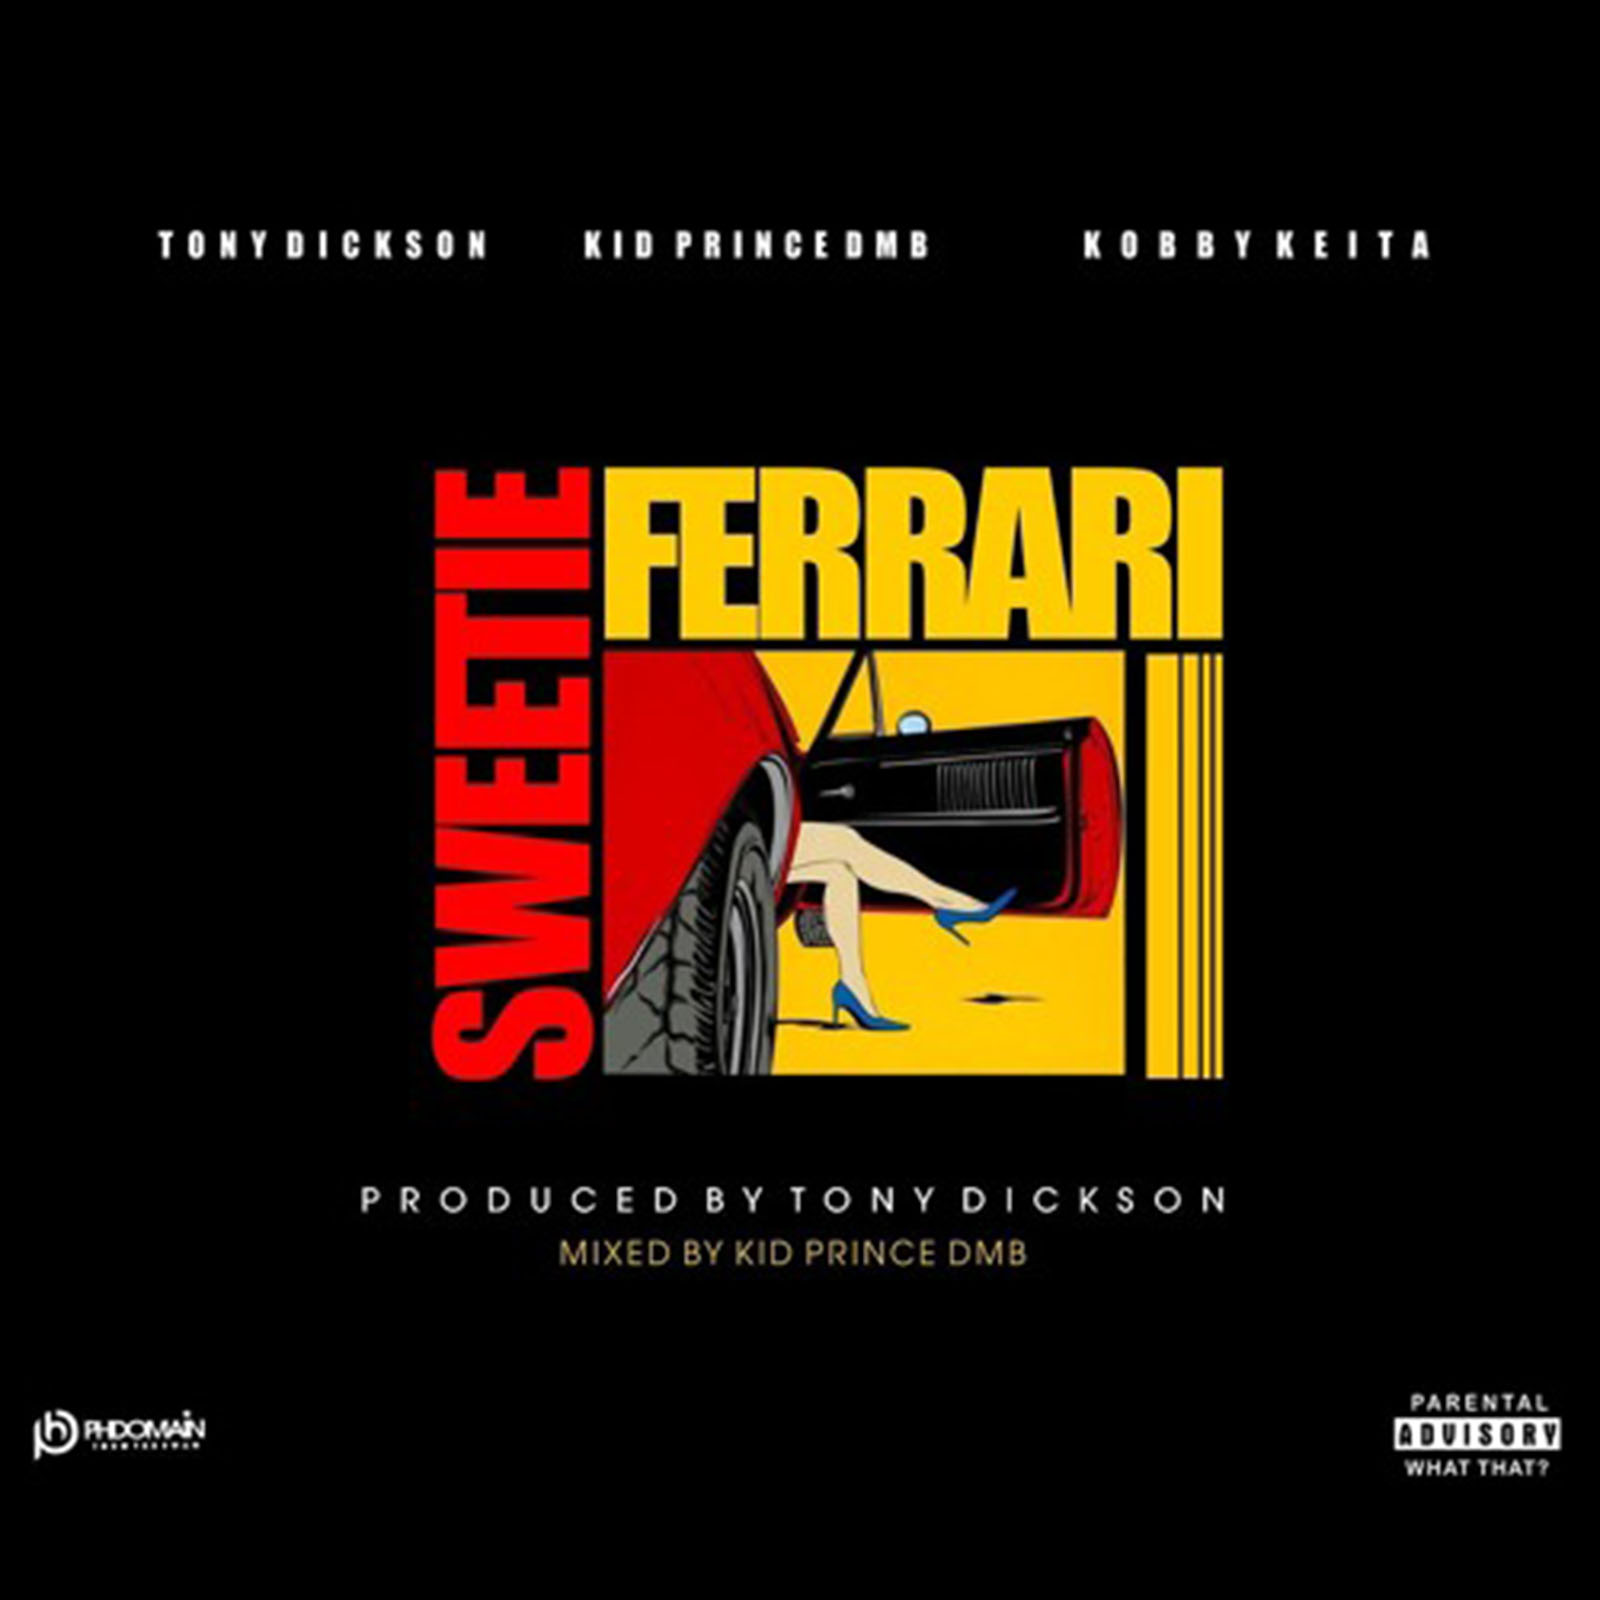 Sweetie Ferrari by Tony dickson feat. Kid Prince DMB & Kobby Keita